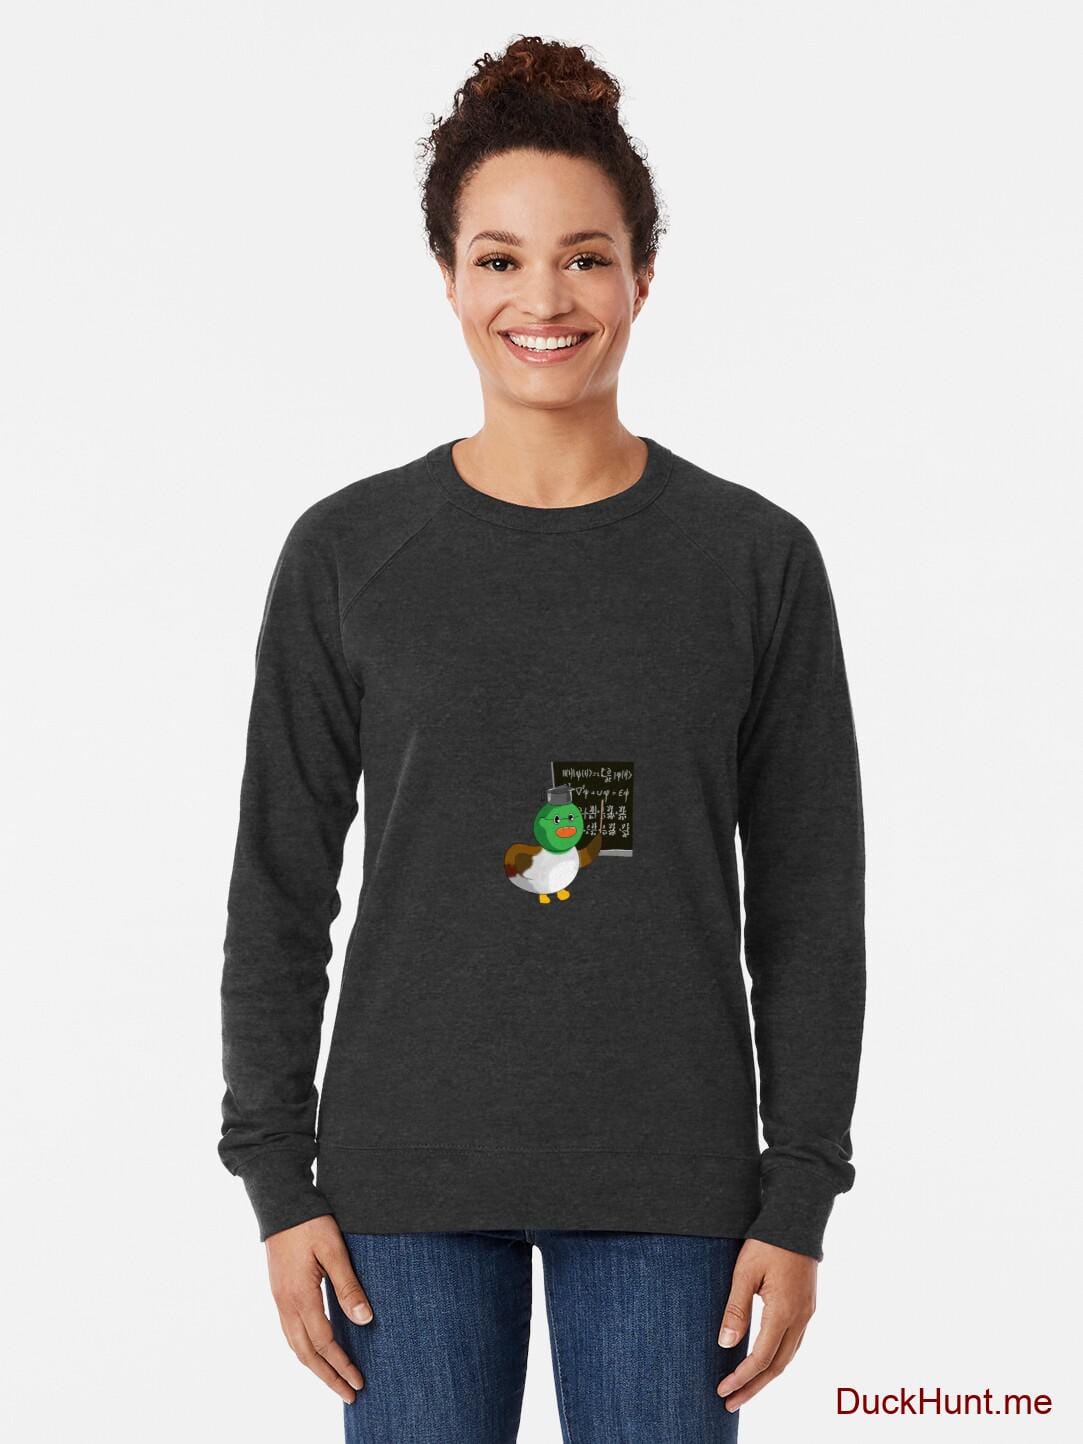 Prof Duck Charcoal Lightweight Sweatshirt alternative image 1